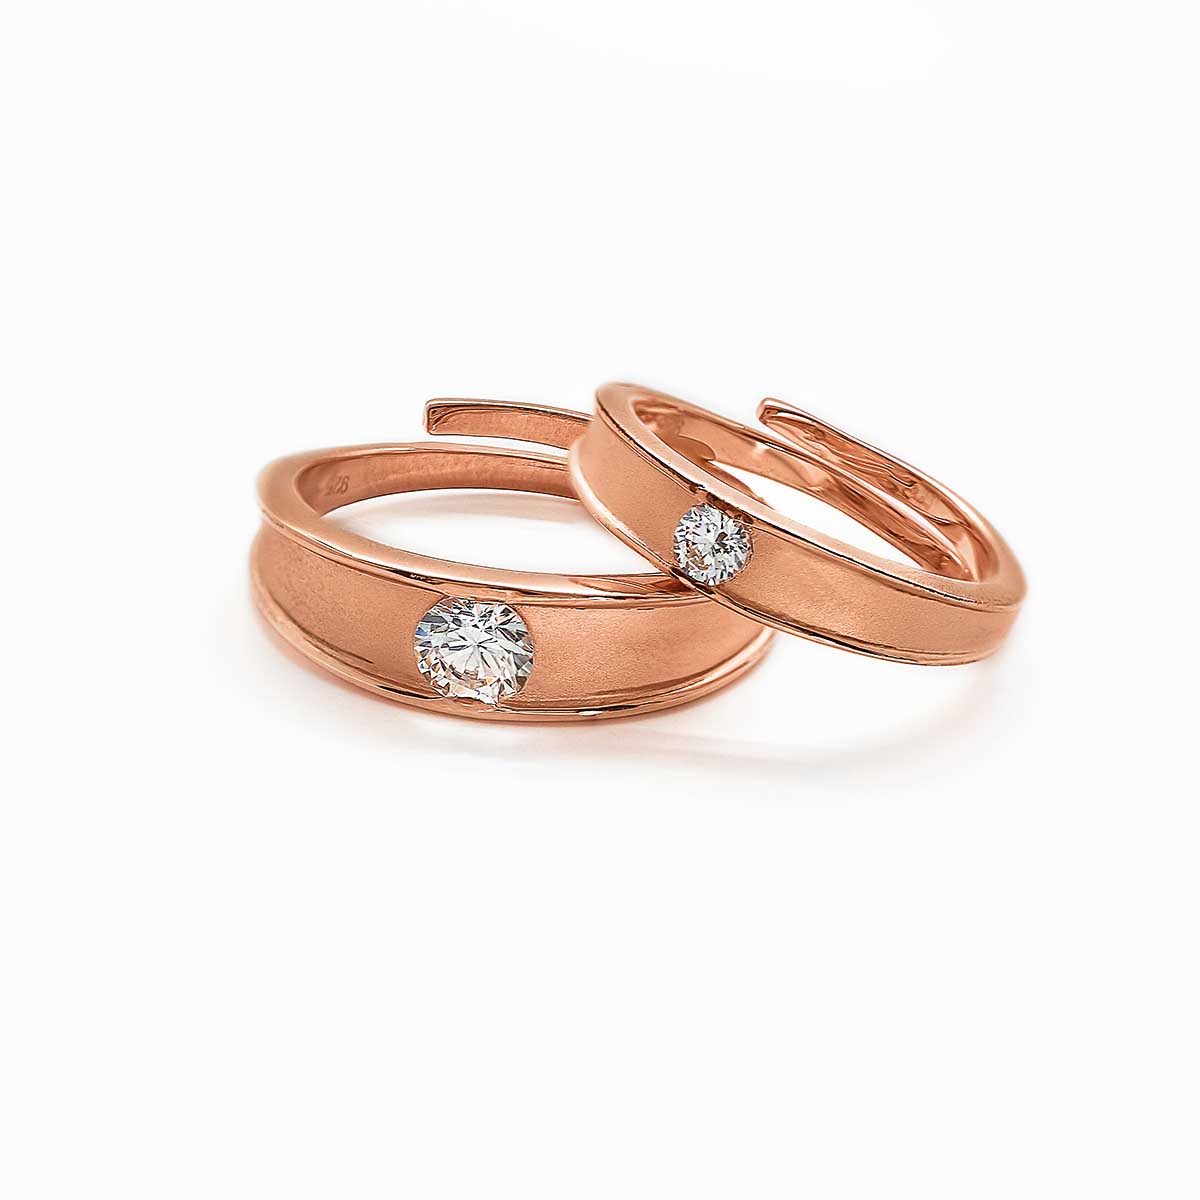 Platinum Wedding Band Sets | Platinum Ring Designs With Price |